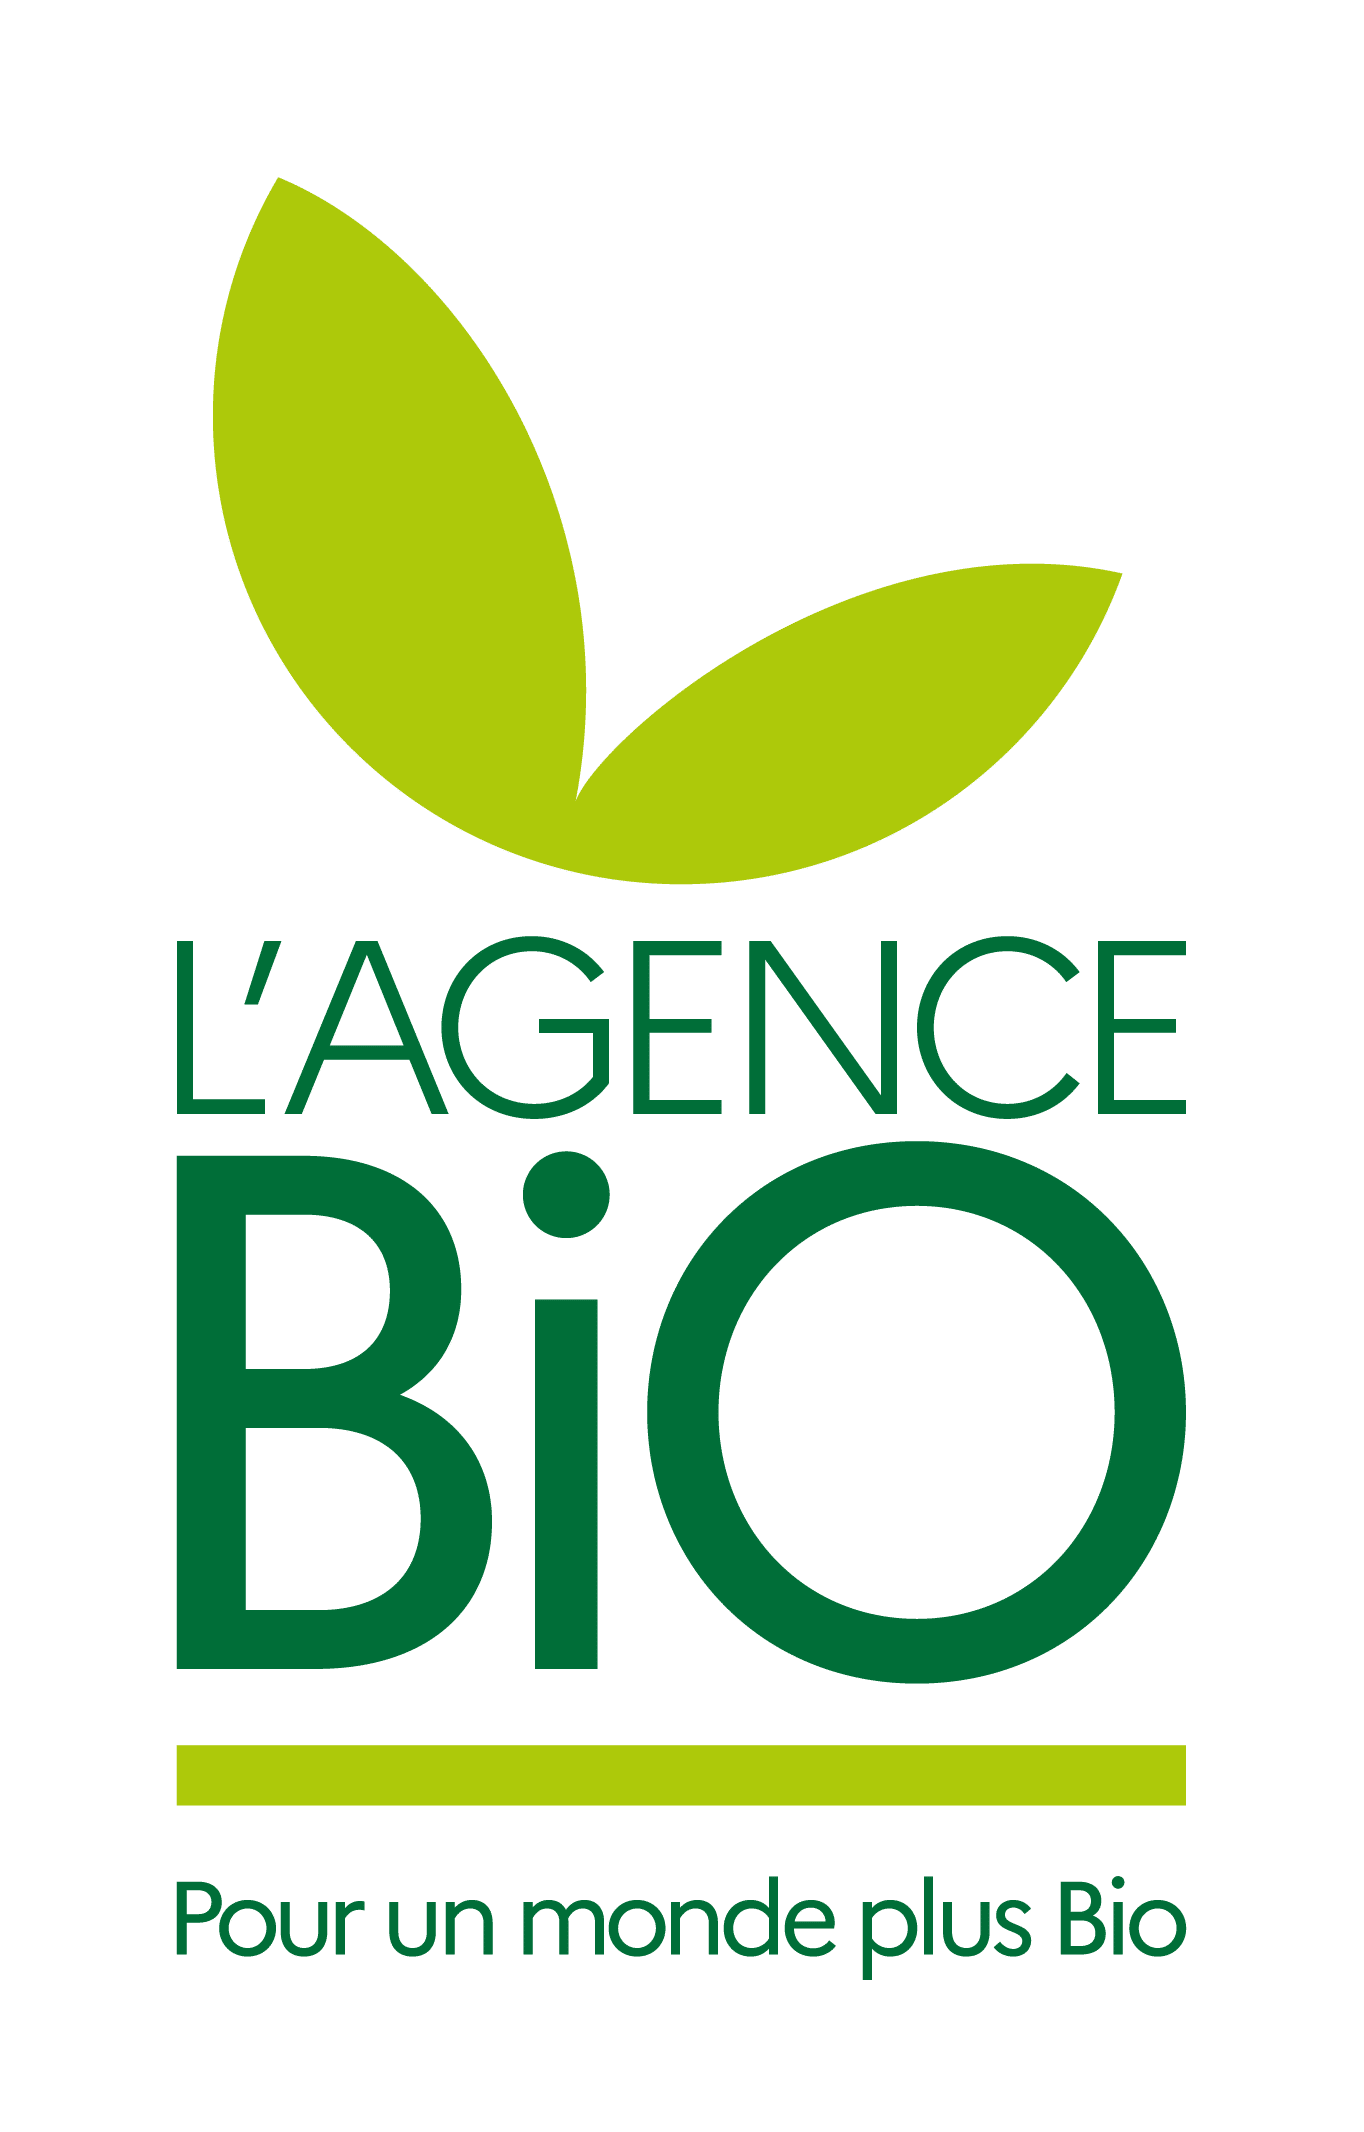 https://territoiresbio.fr/wp-content/uploads/2020/02/logo-agence-bio.png